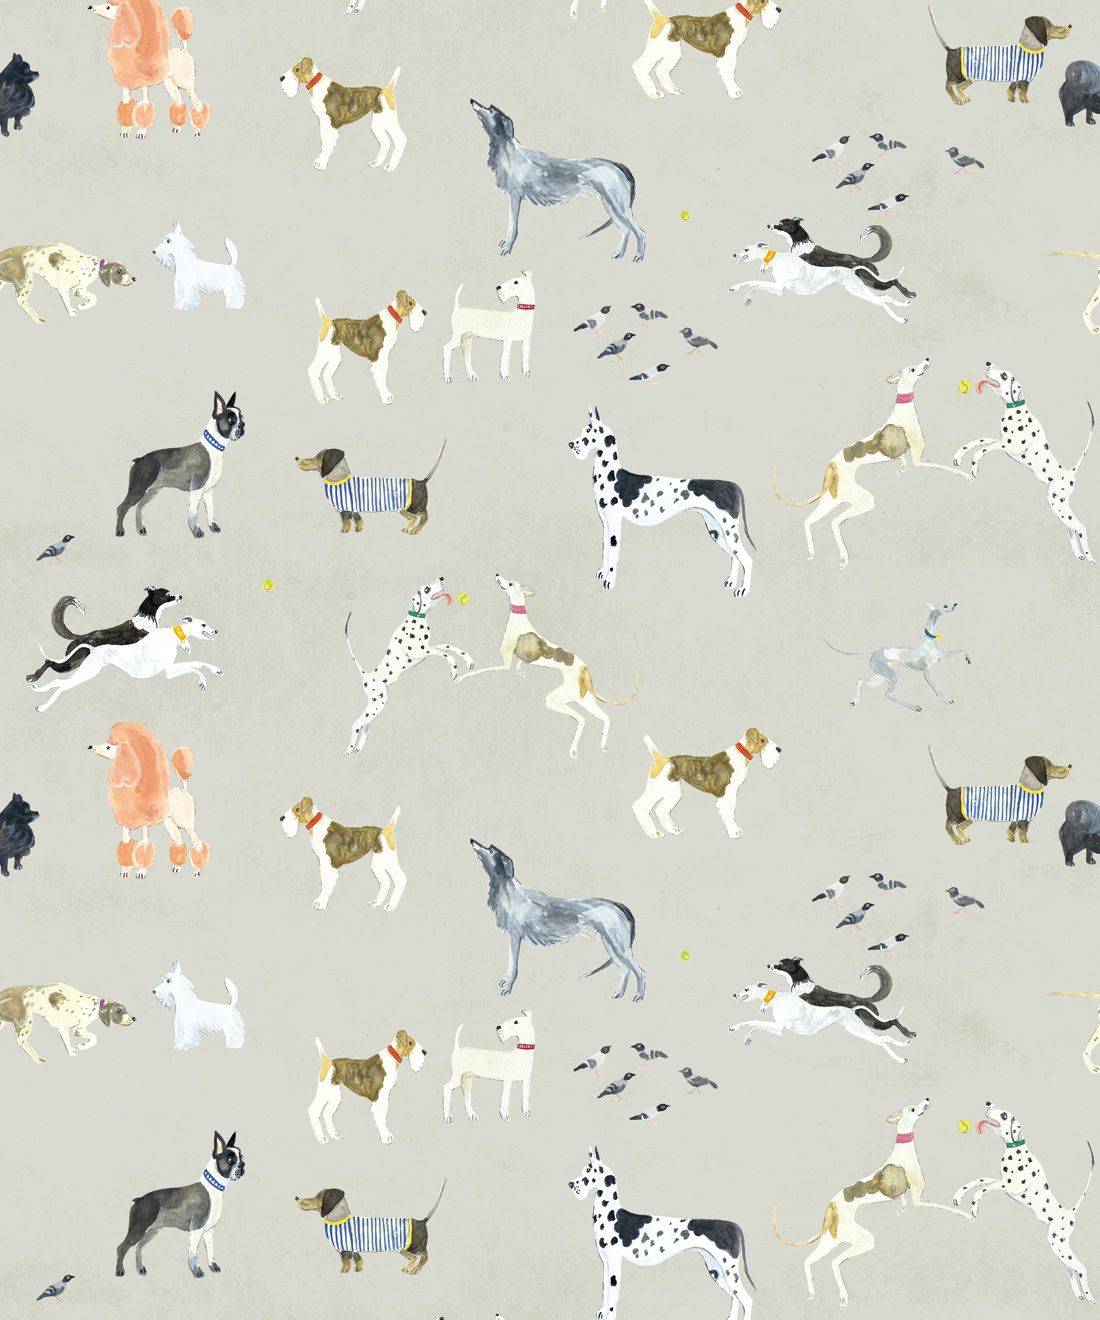 Cute Dog Wallpapers Hd  640x960 Wallpaper  teahubio